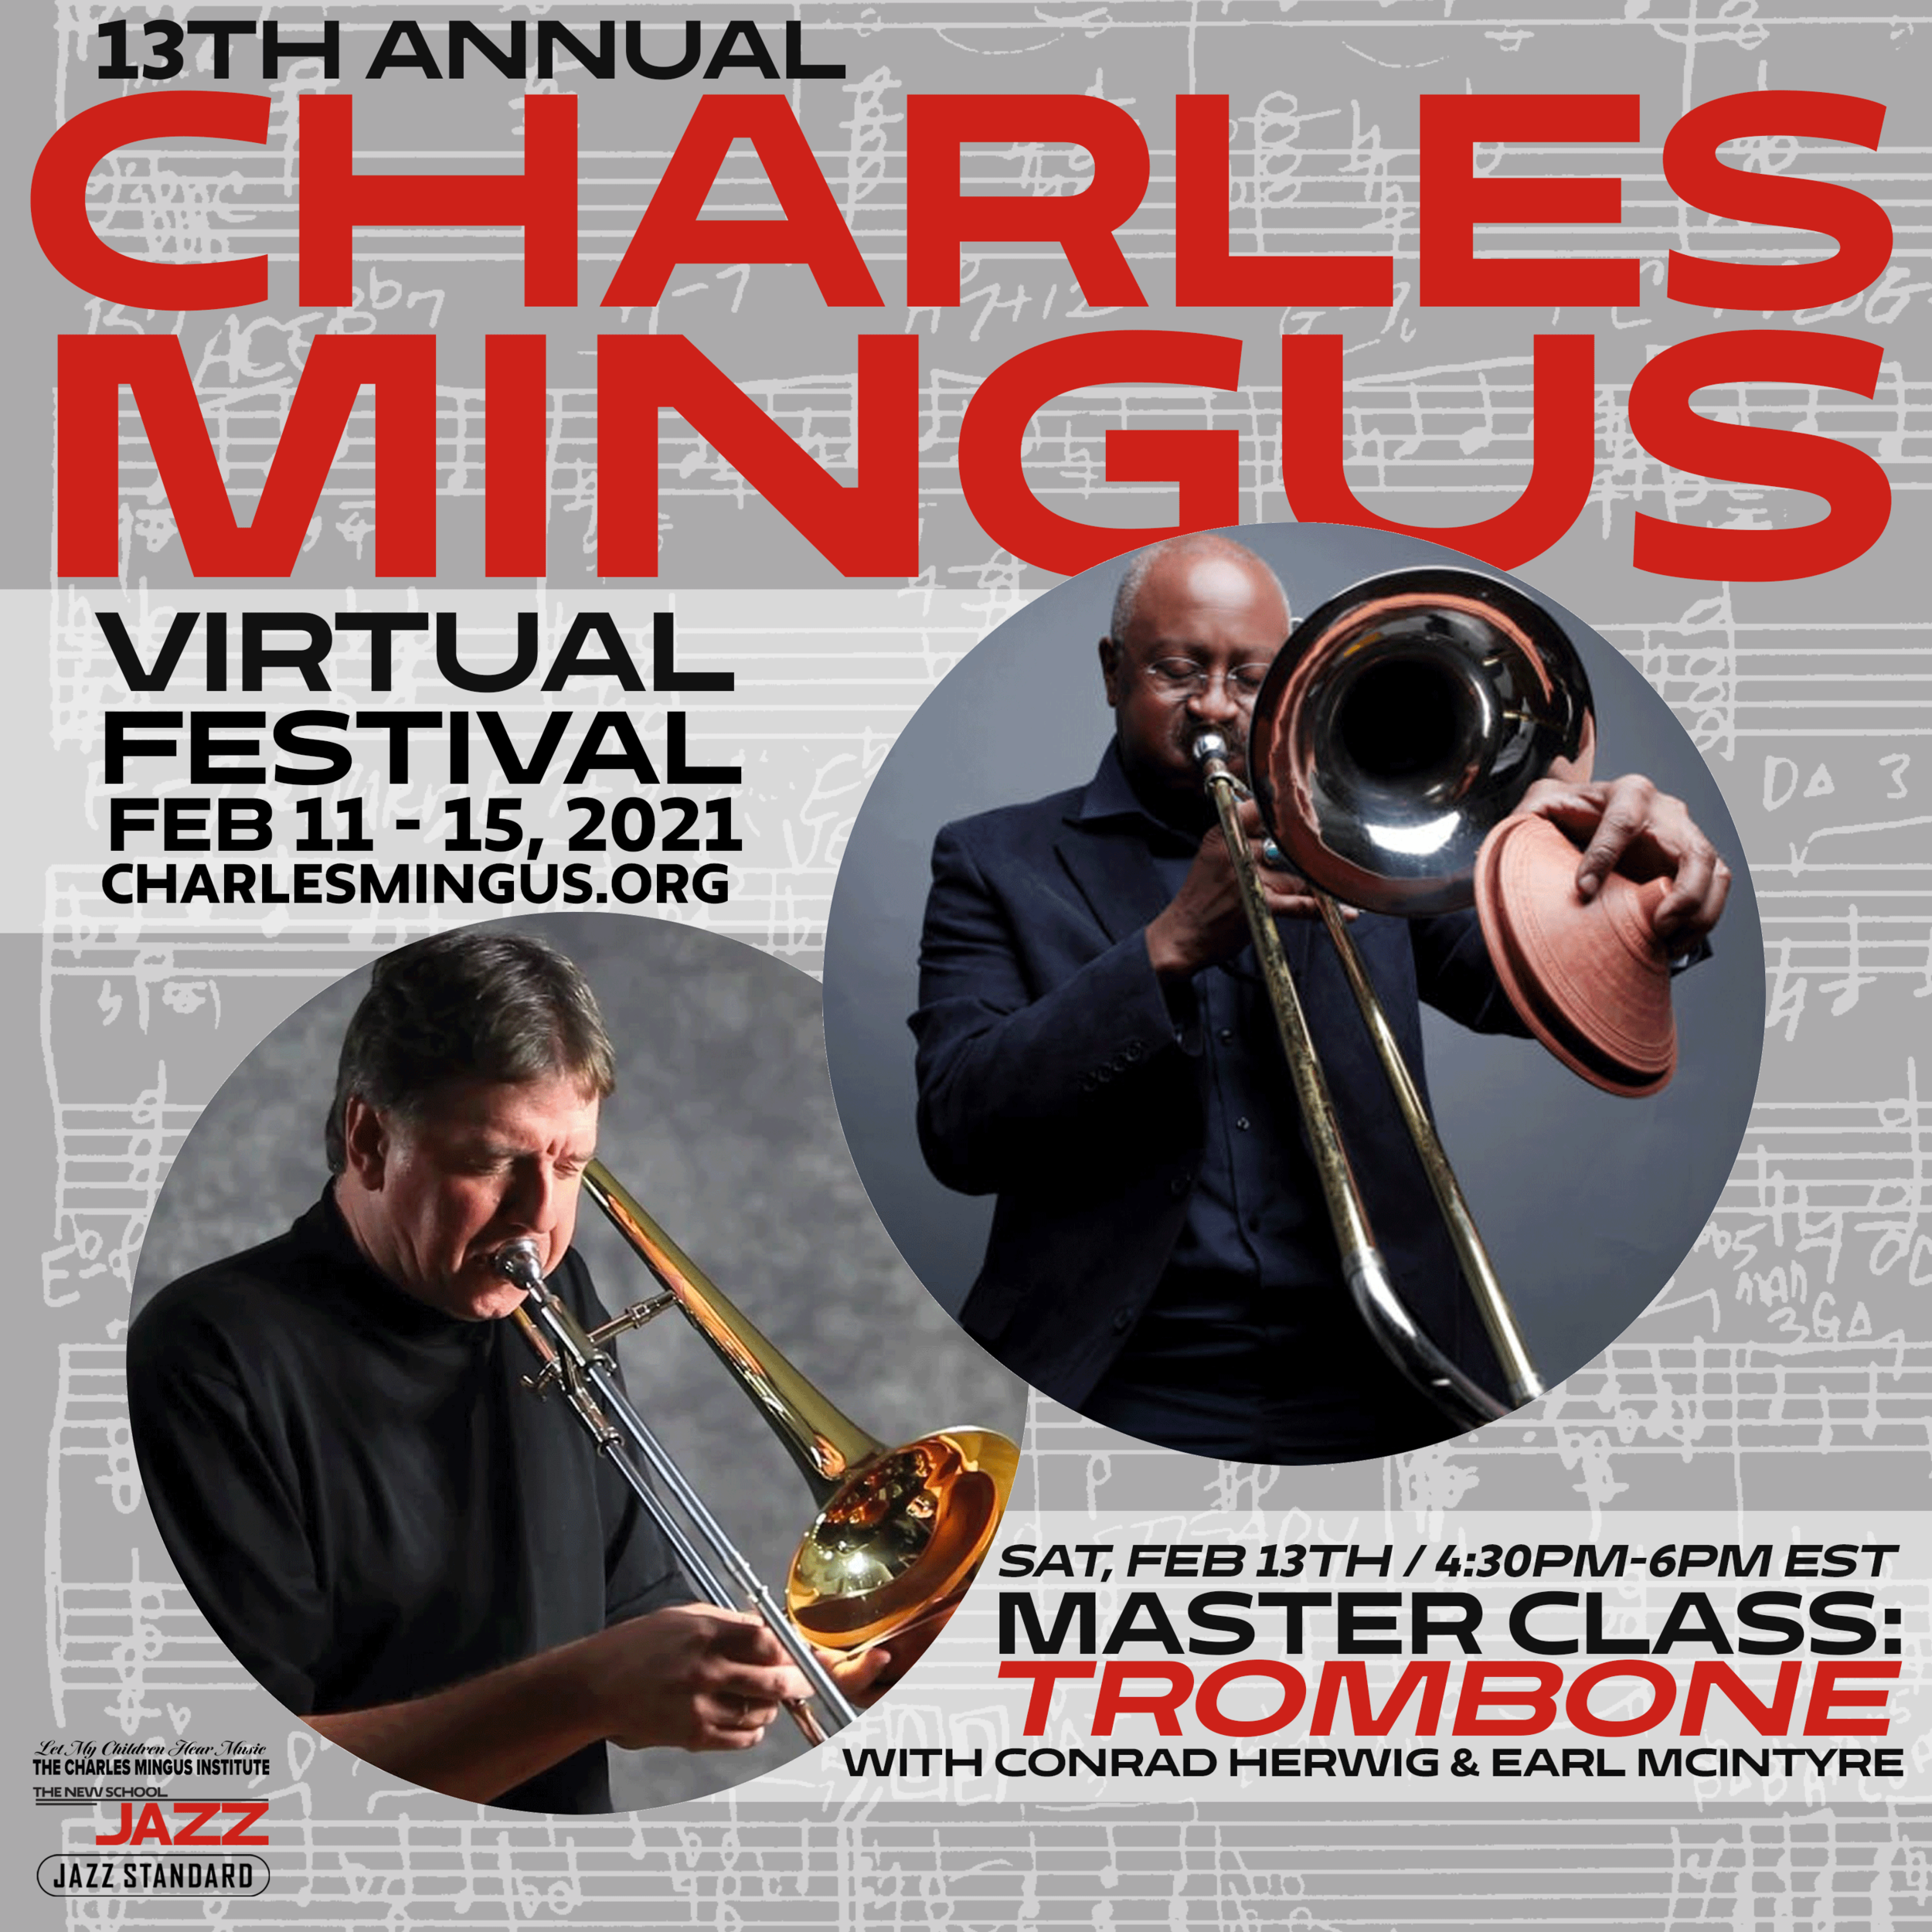 Mingus Fest 2021 / MASTER CLASS: Trombone